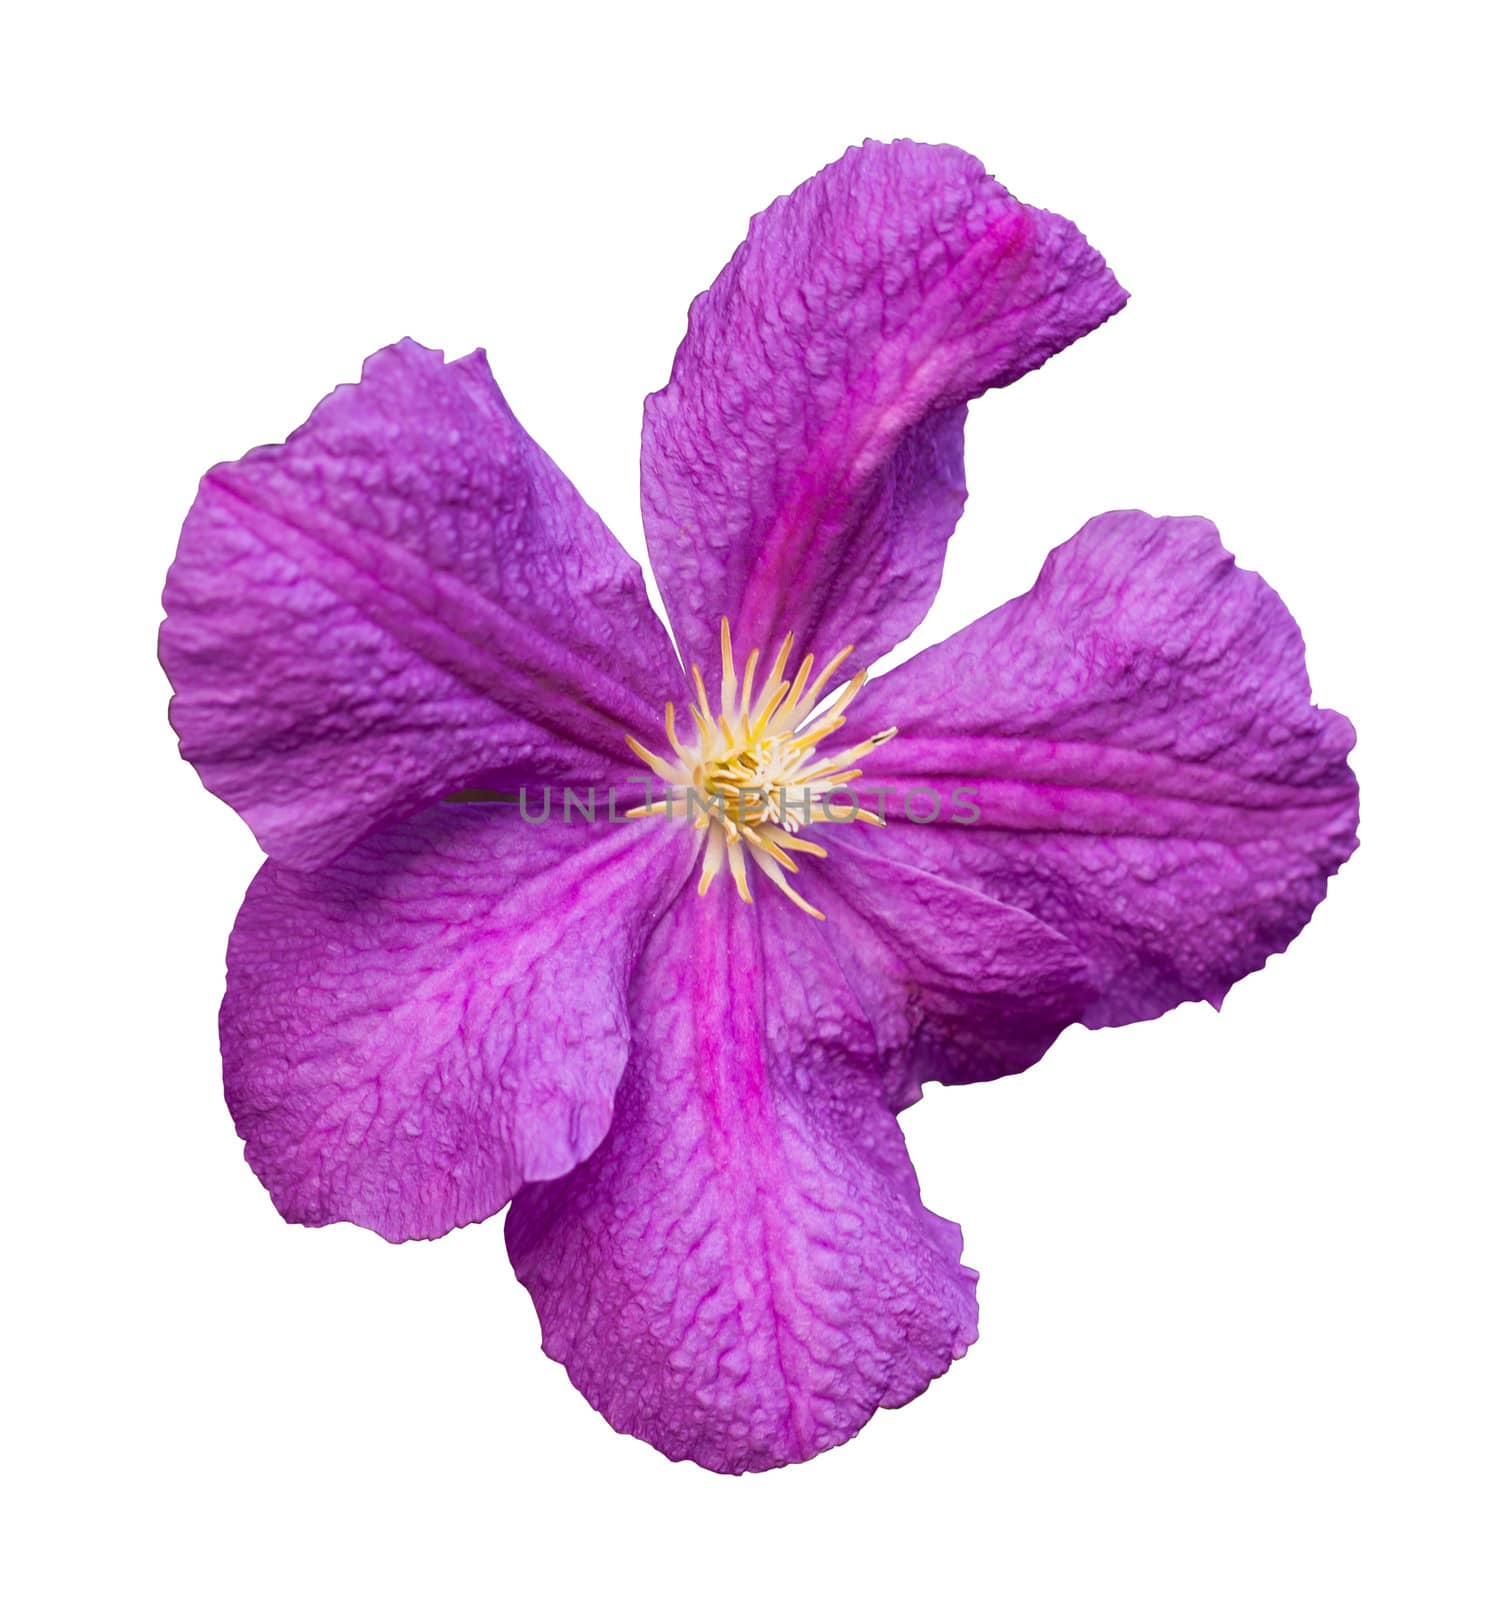 Beautiful purple flower isolated on white background